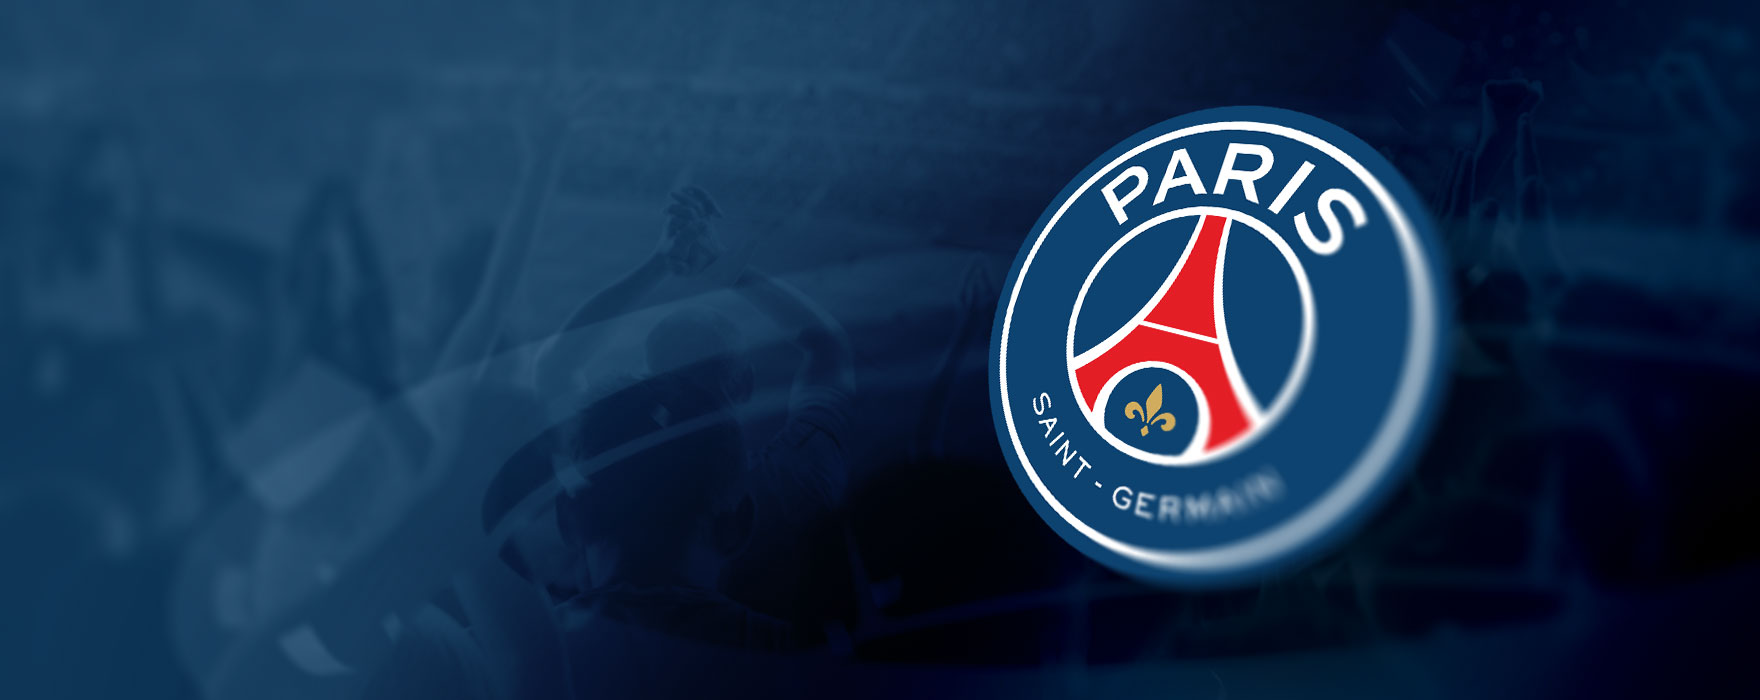 Paris Saint-Germain - Francuska liga - NOGOMET - Stadionshop.com